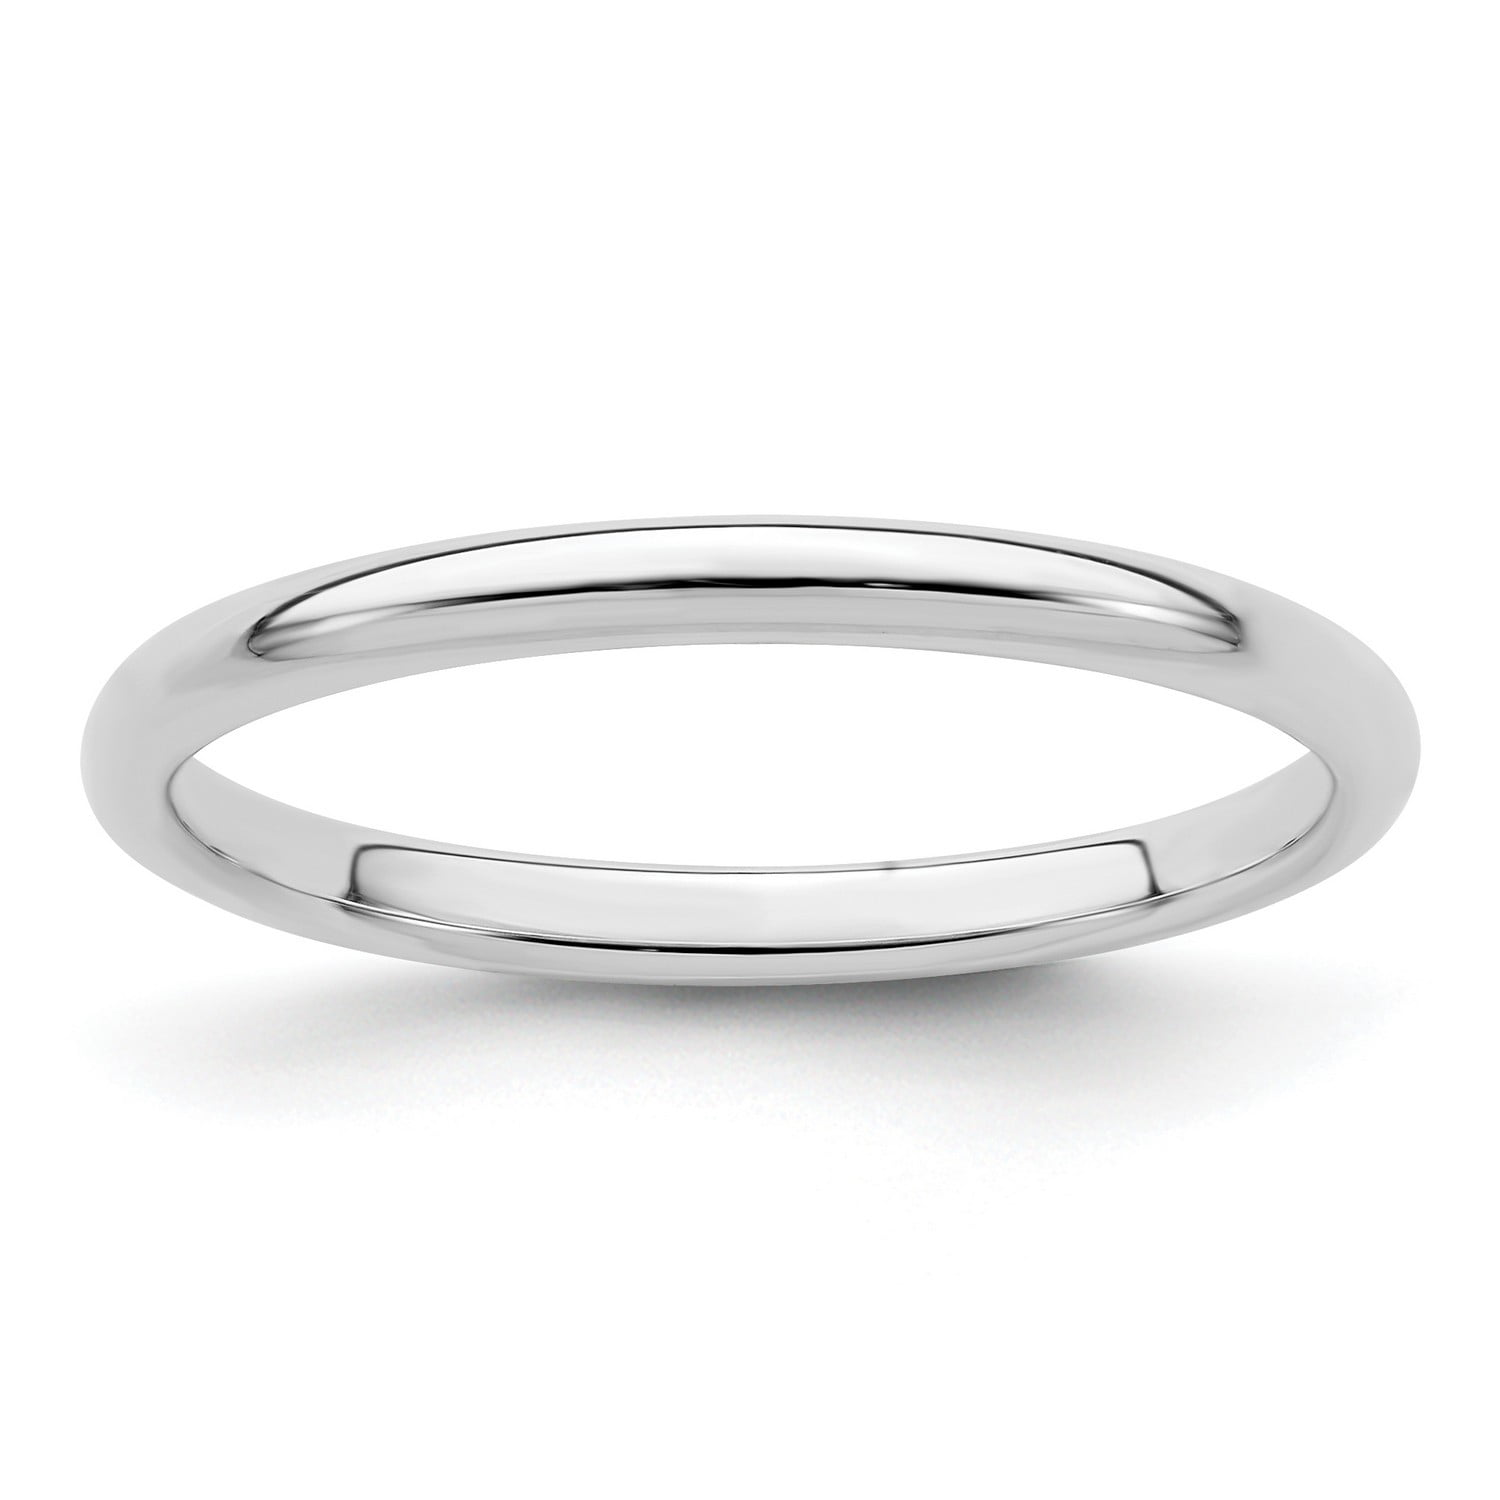 2mm Half Round Sterling Silver Wedding Band Ring